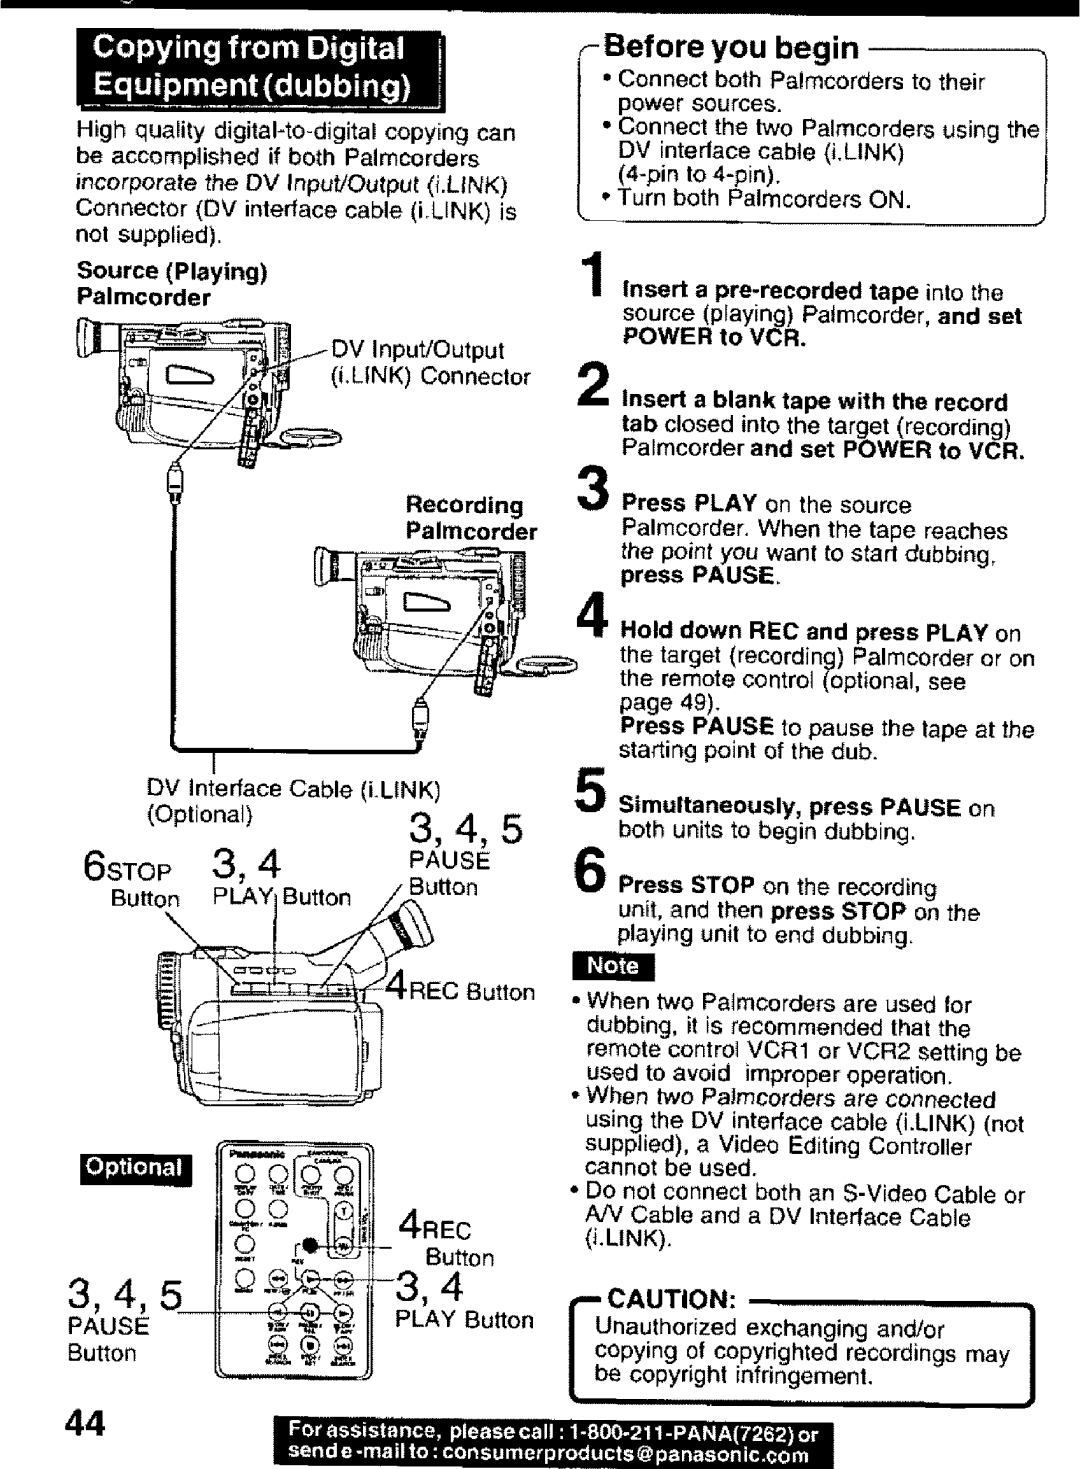 Panasonic PV-DV101 manual O t onal, 3, 4, 3,4,5, 6STOP 3, Pause, RECSutton, Before you begin 